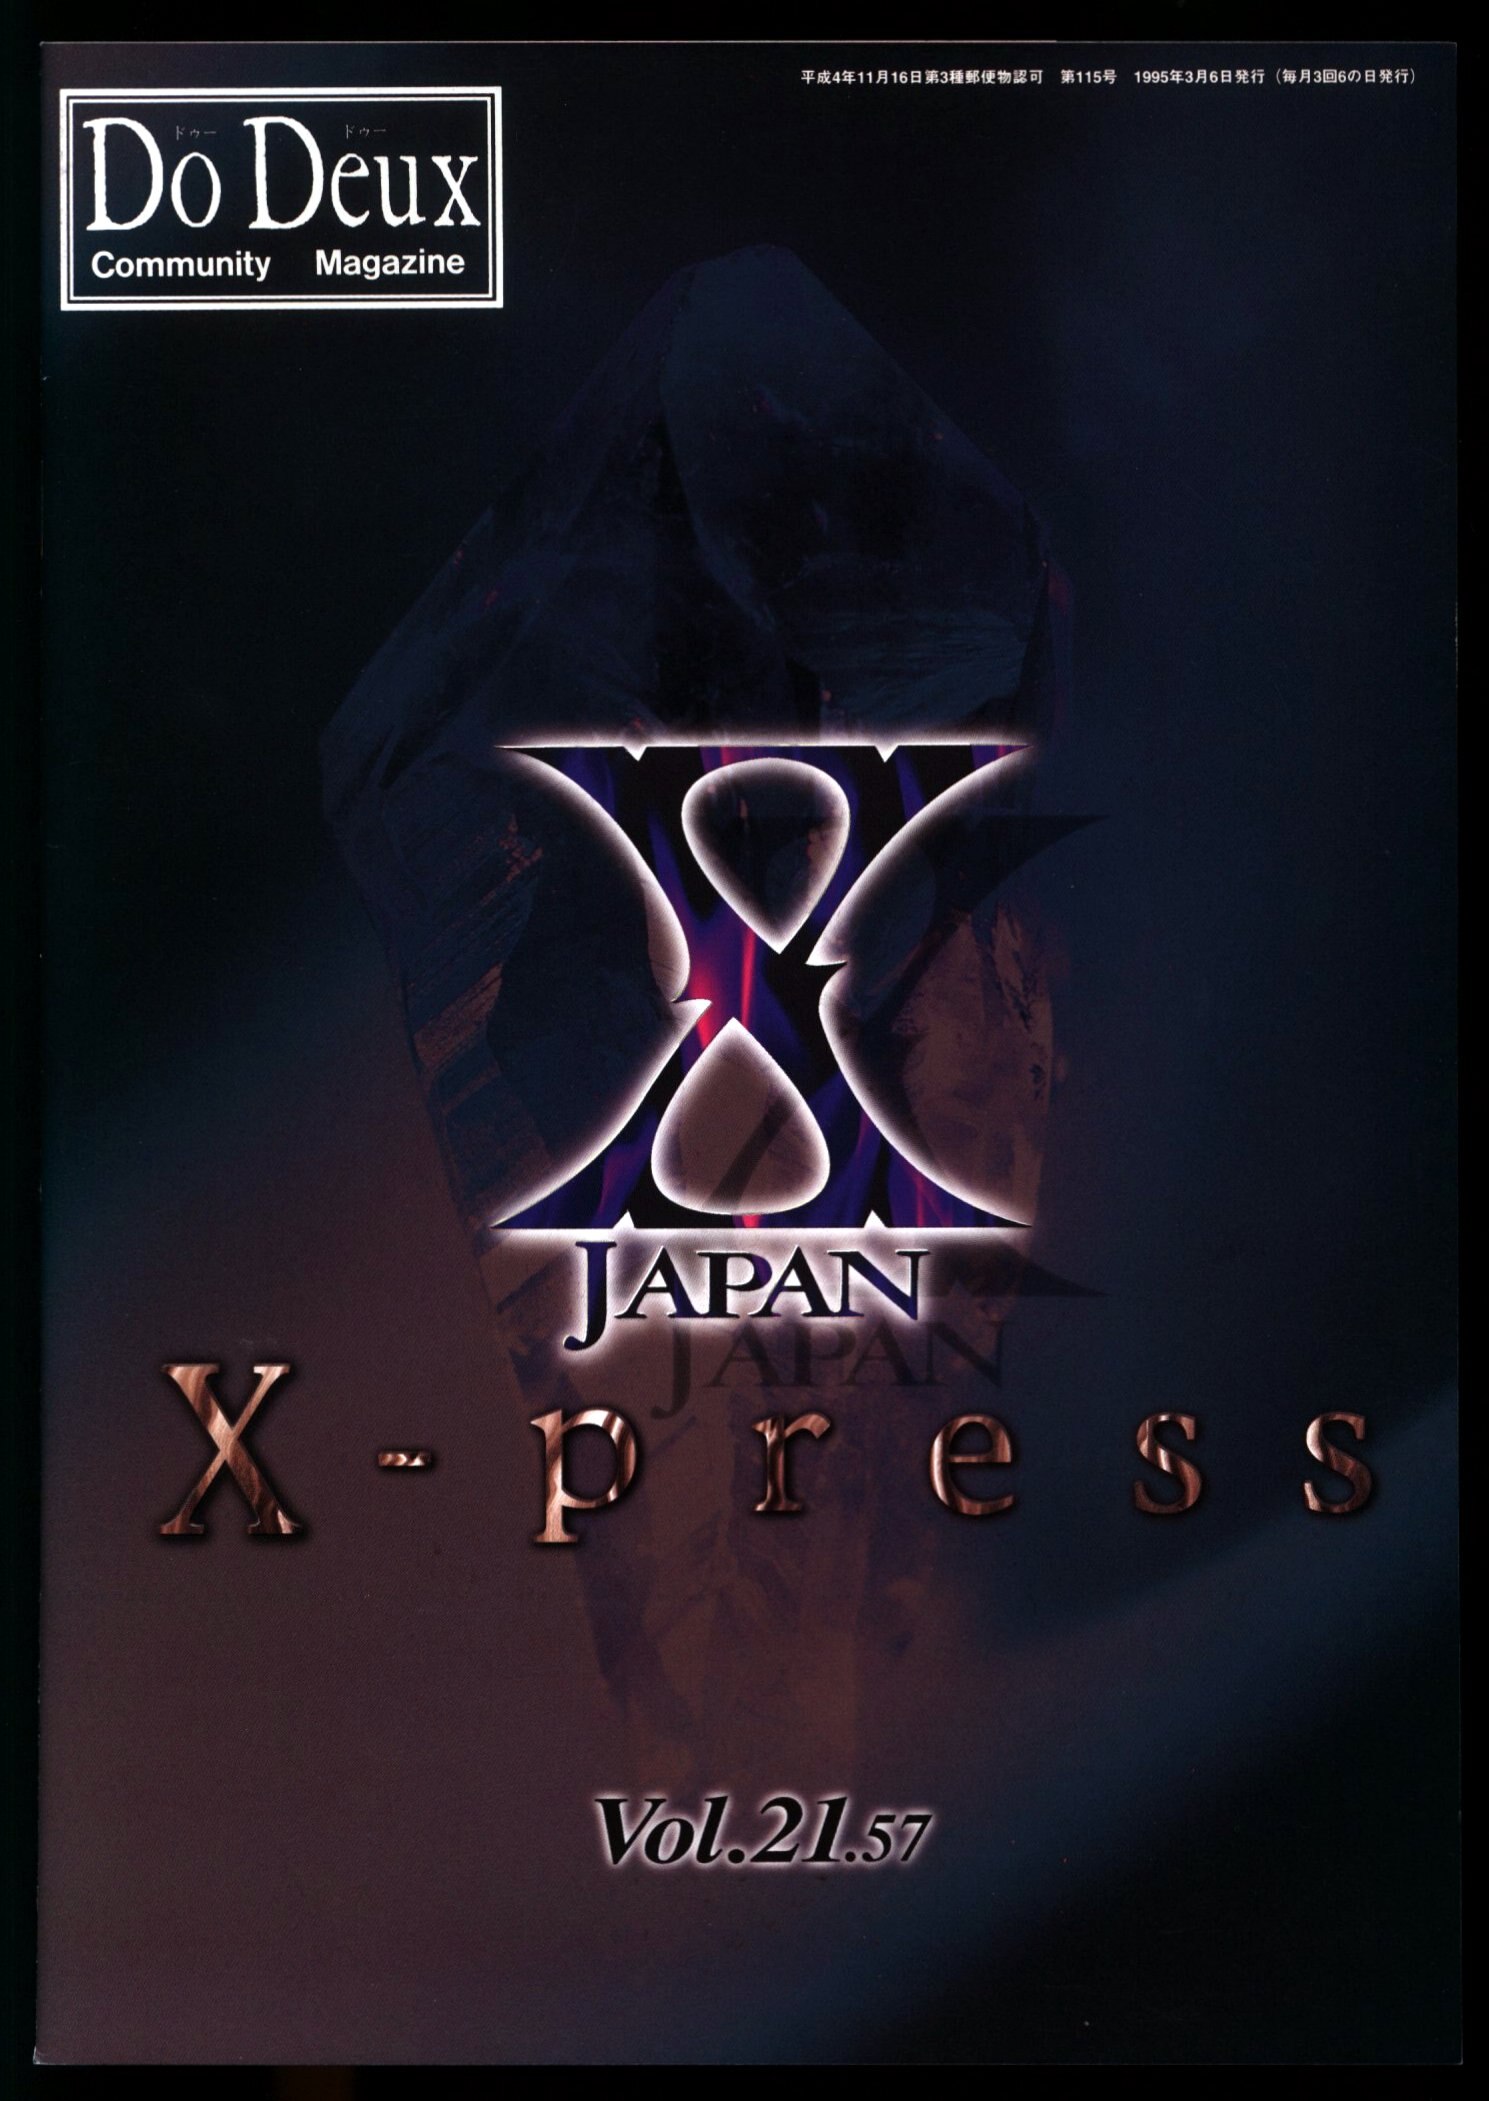 X JAPAN 会報 X-press Vol.21.57 | まんだらけ Mandarake